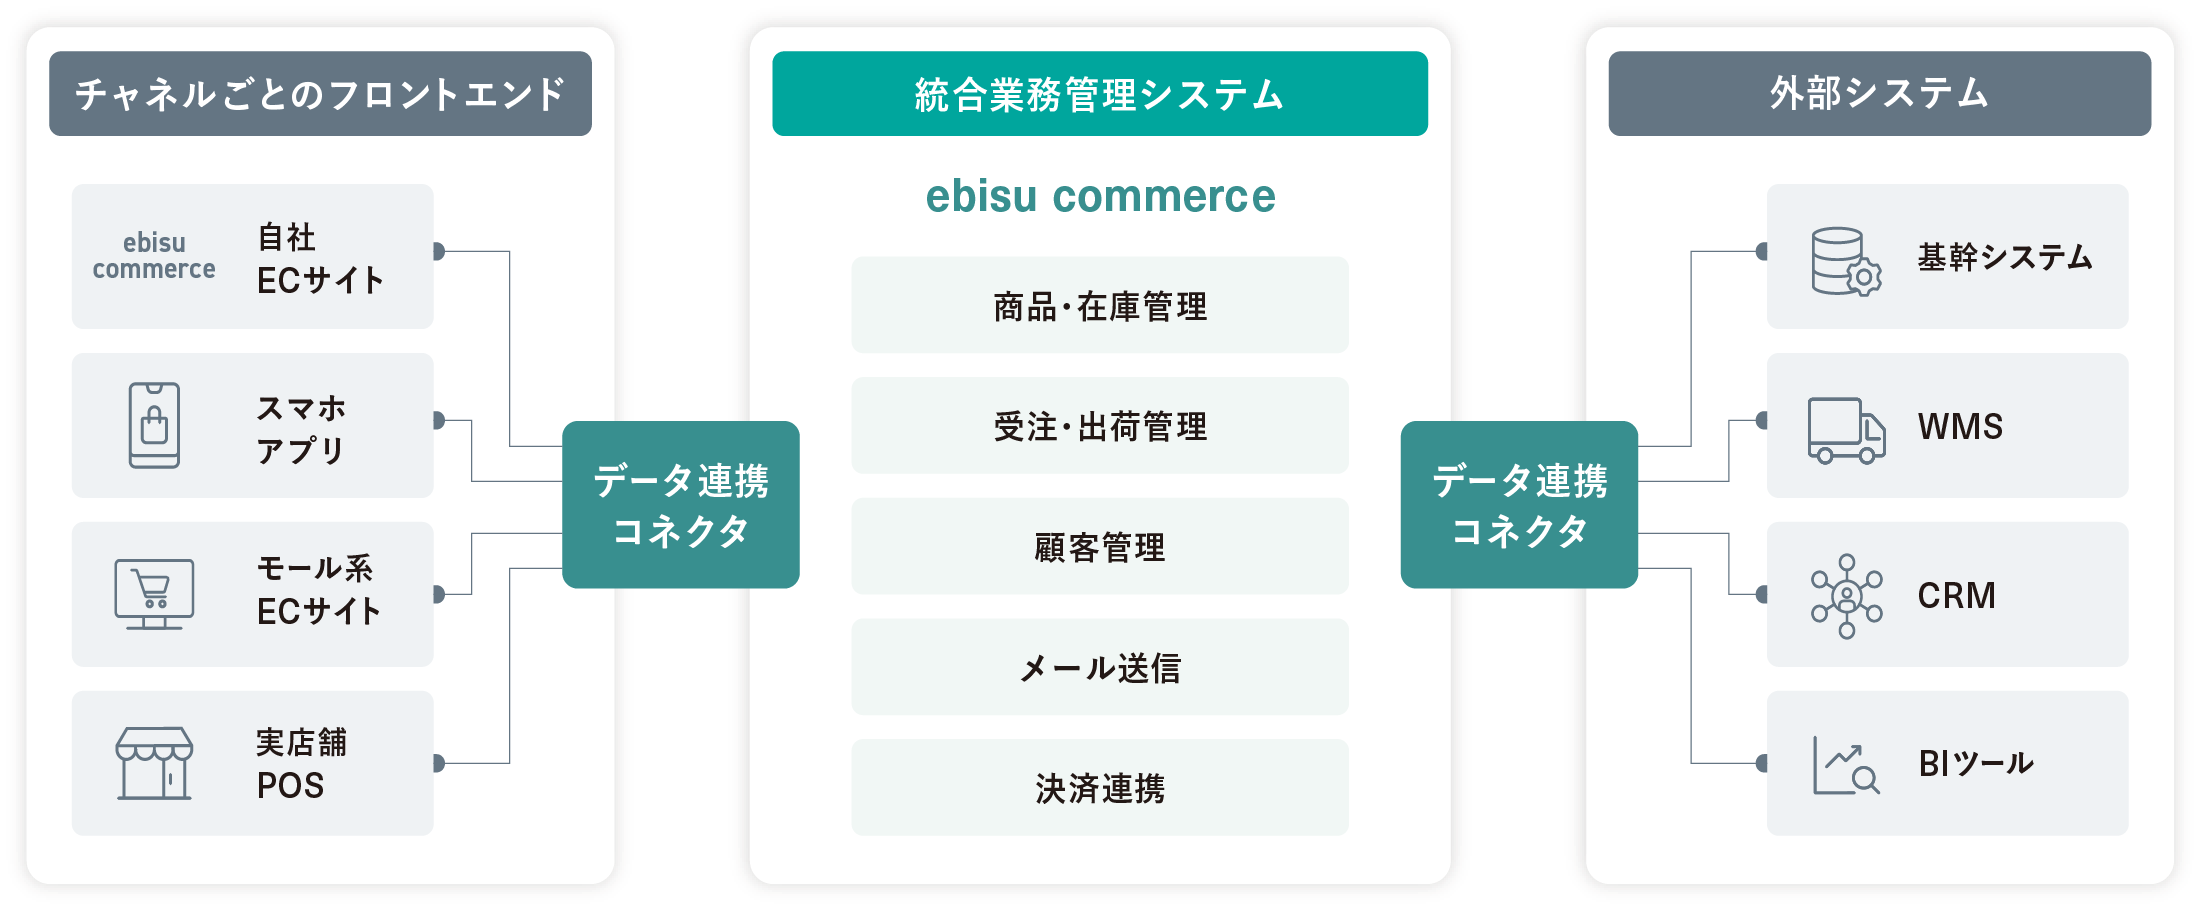 ebisu commerceの強みについて